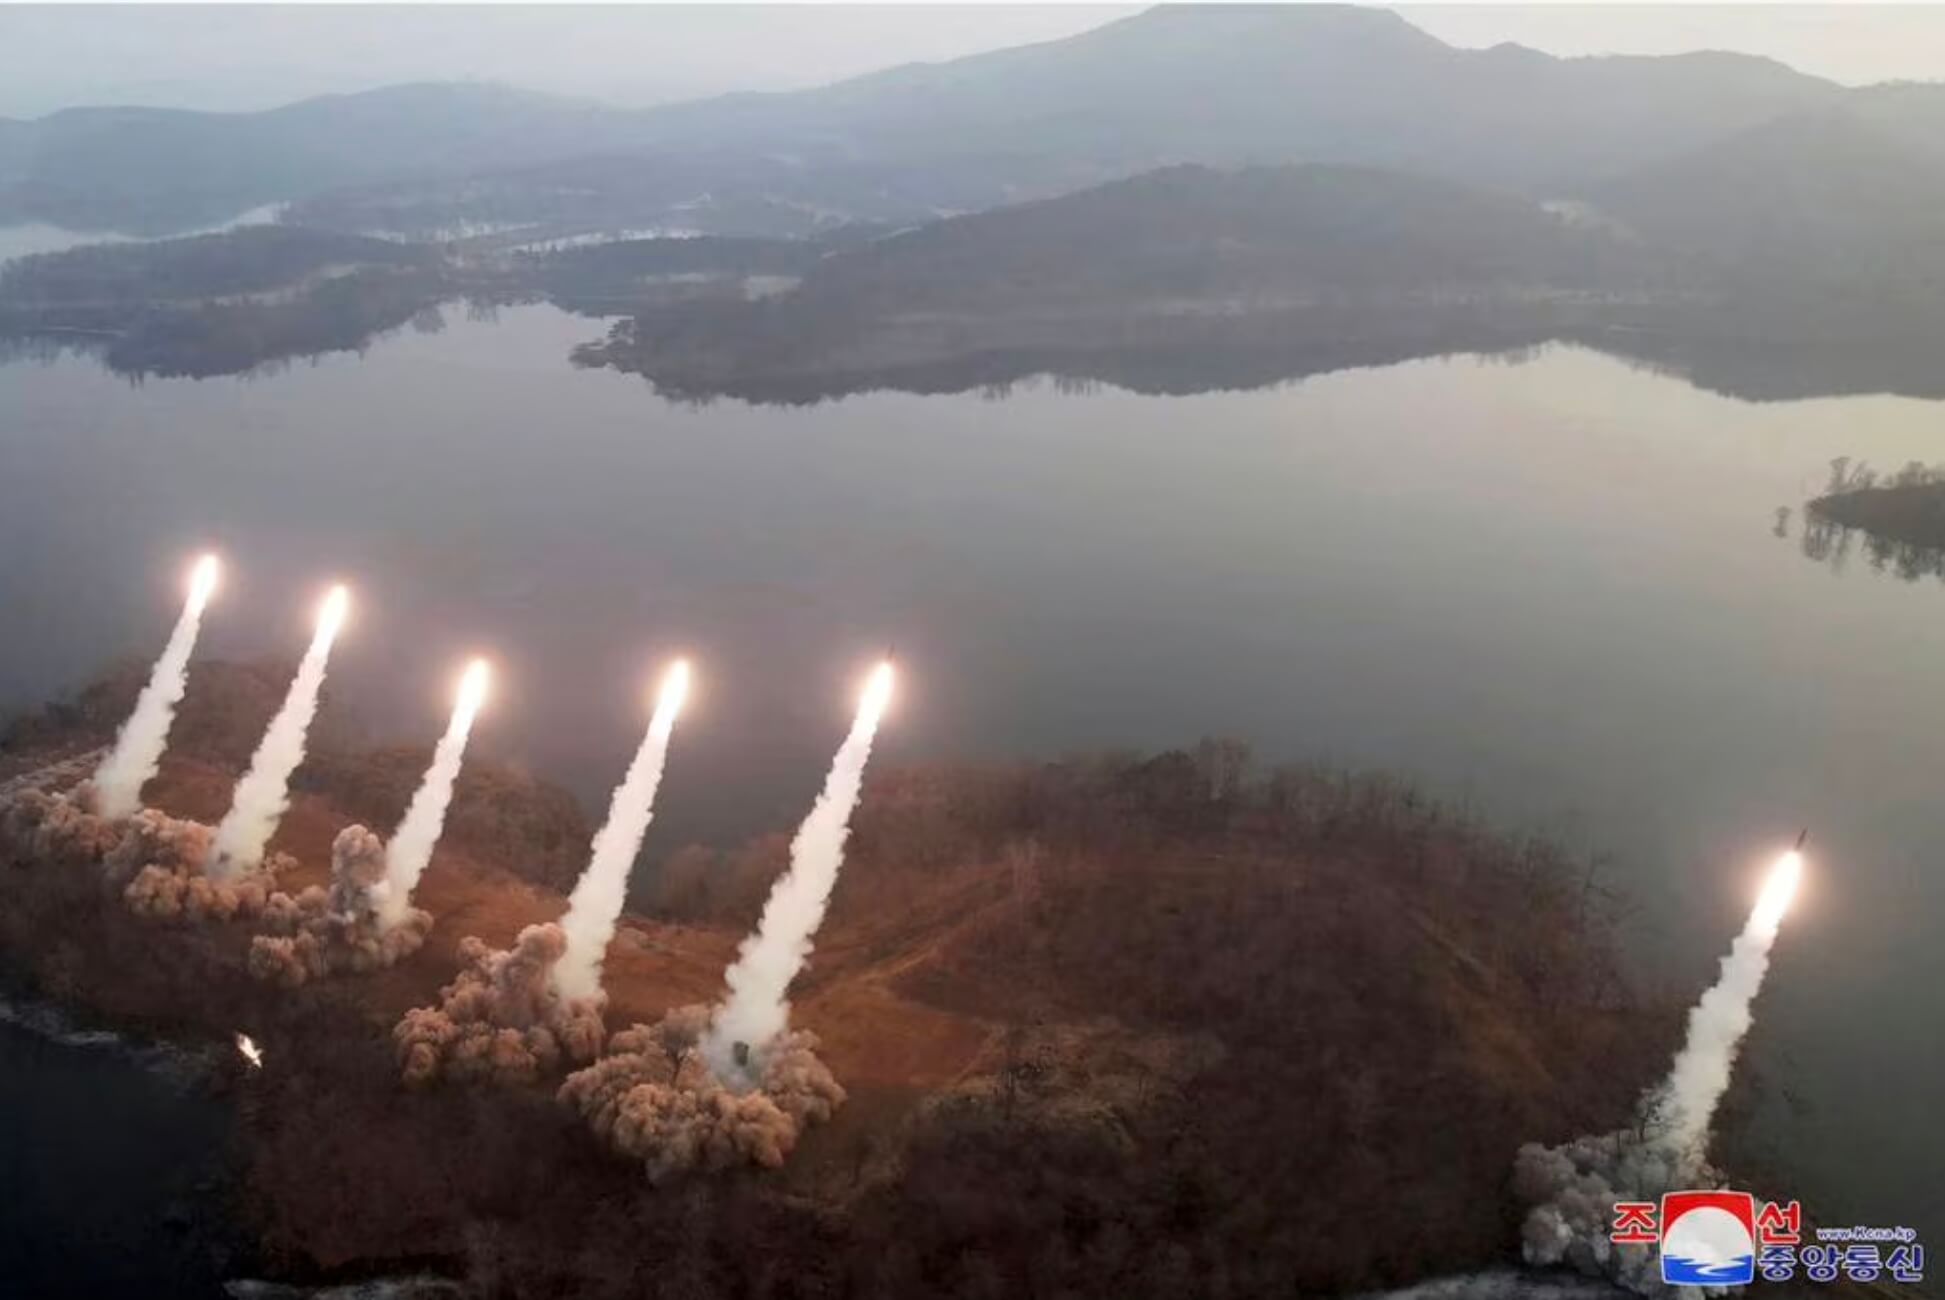 North Korea simulates an attack on South Korea